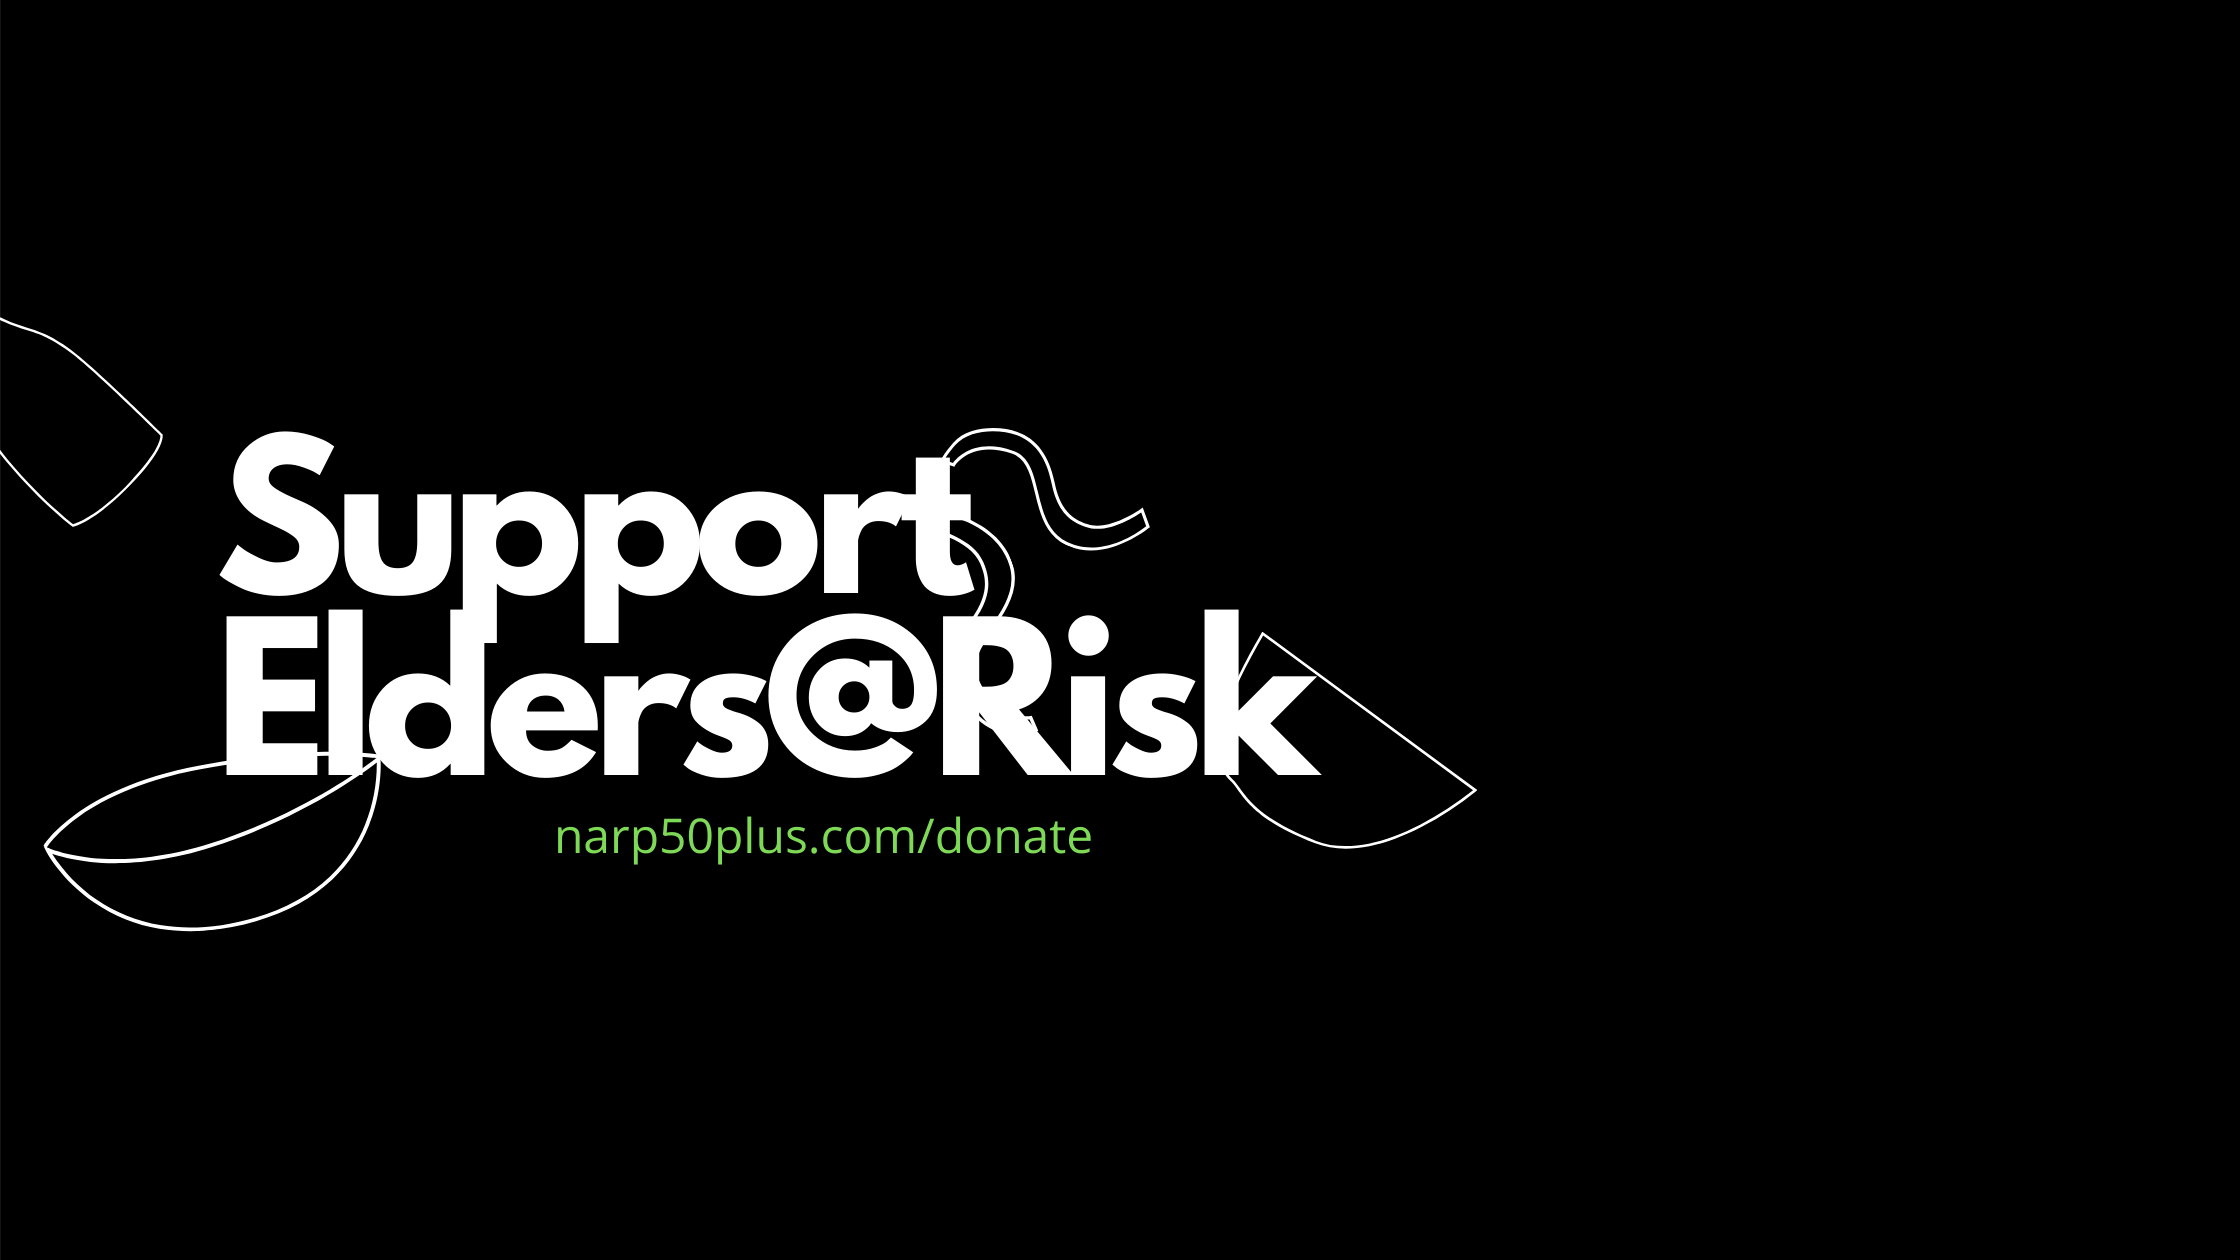 Support Elders@Risk